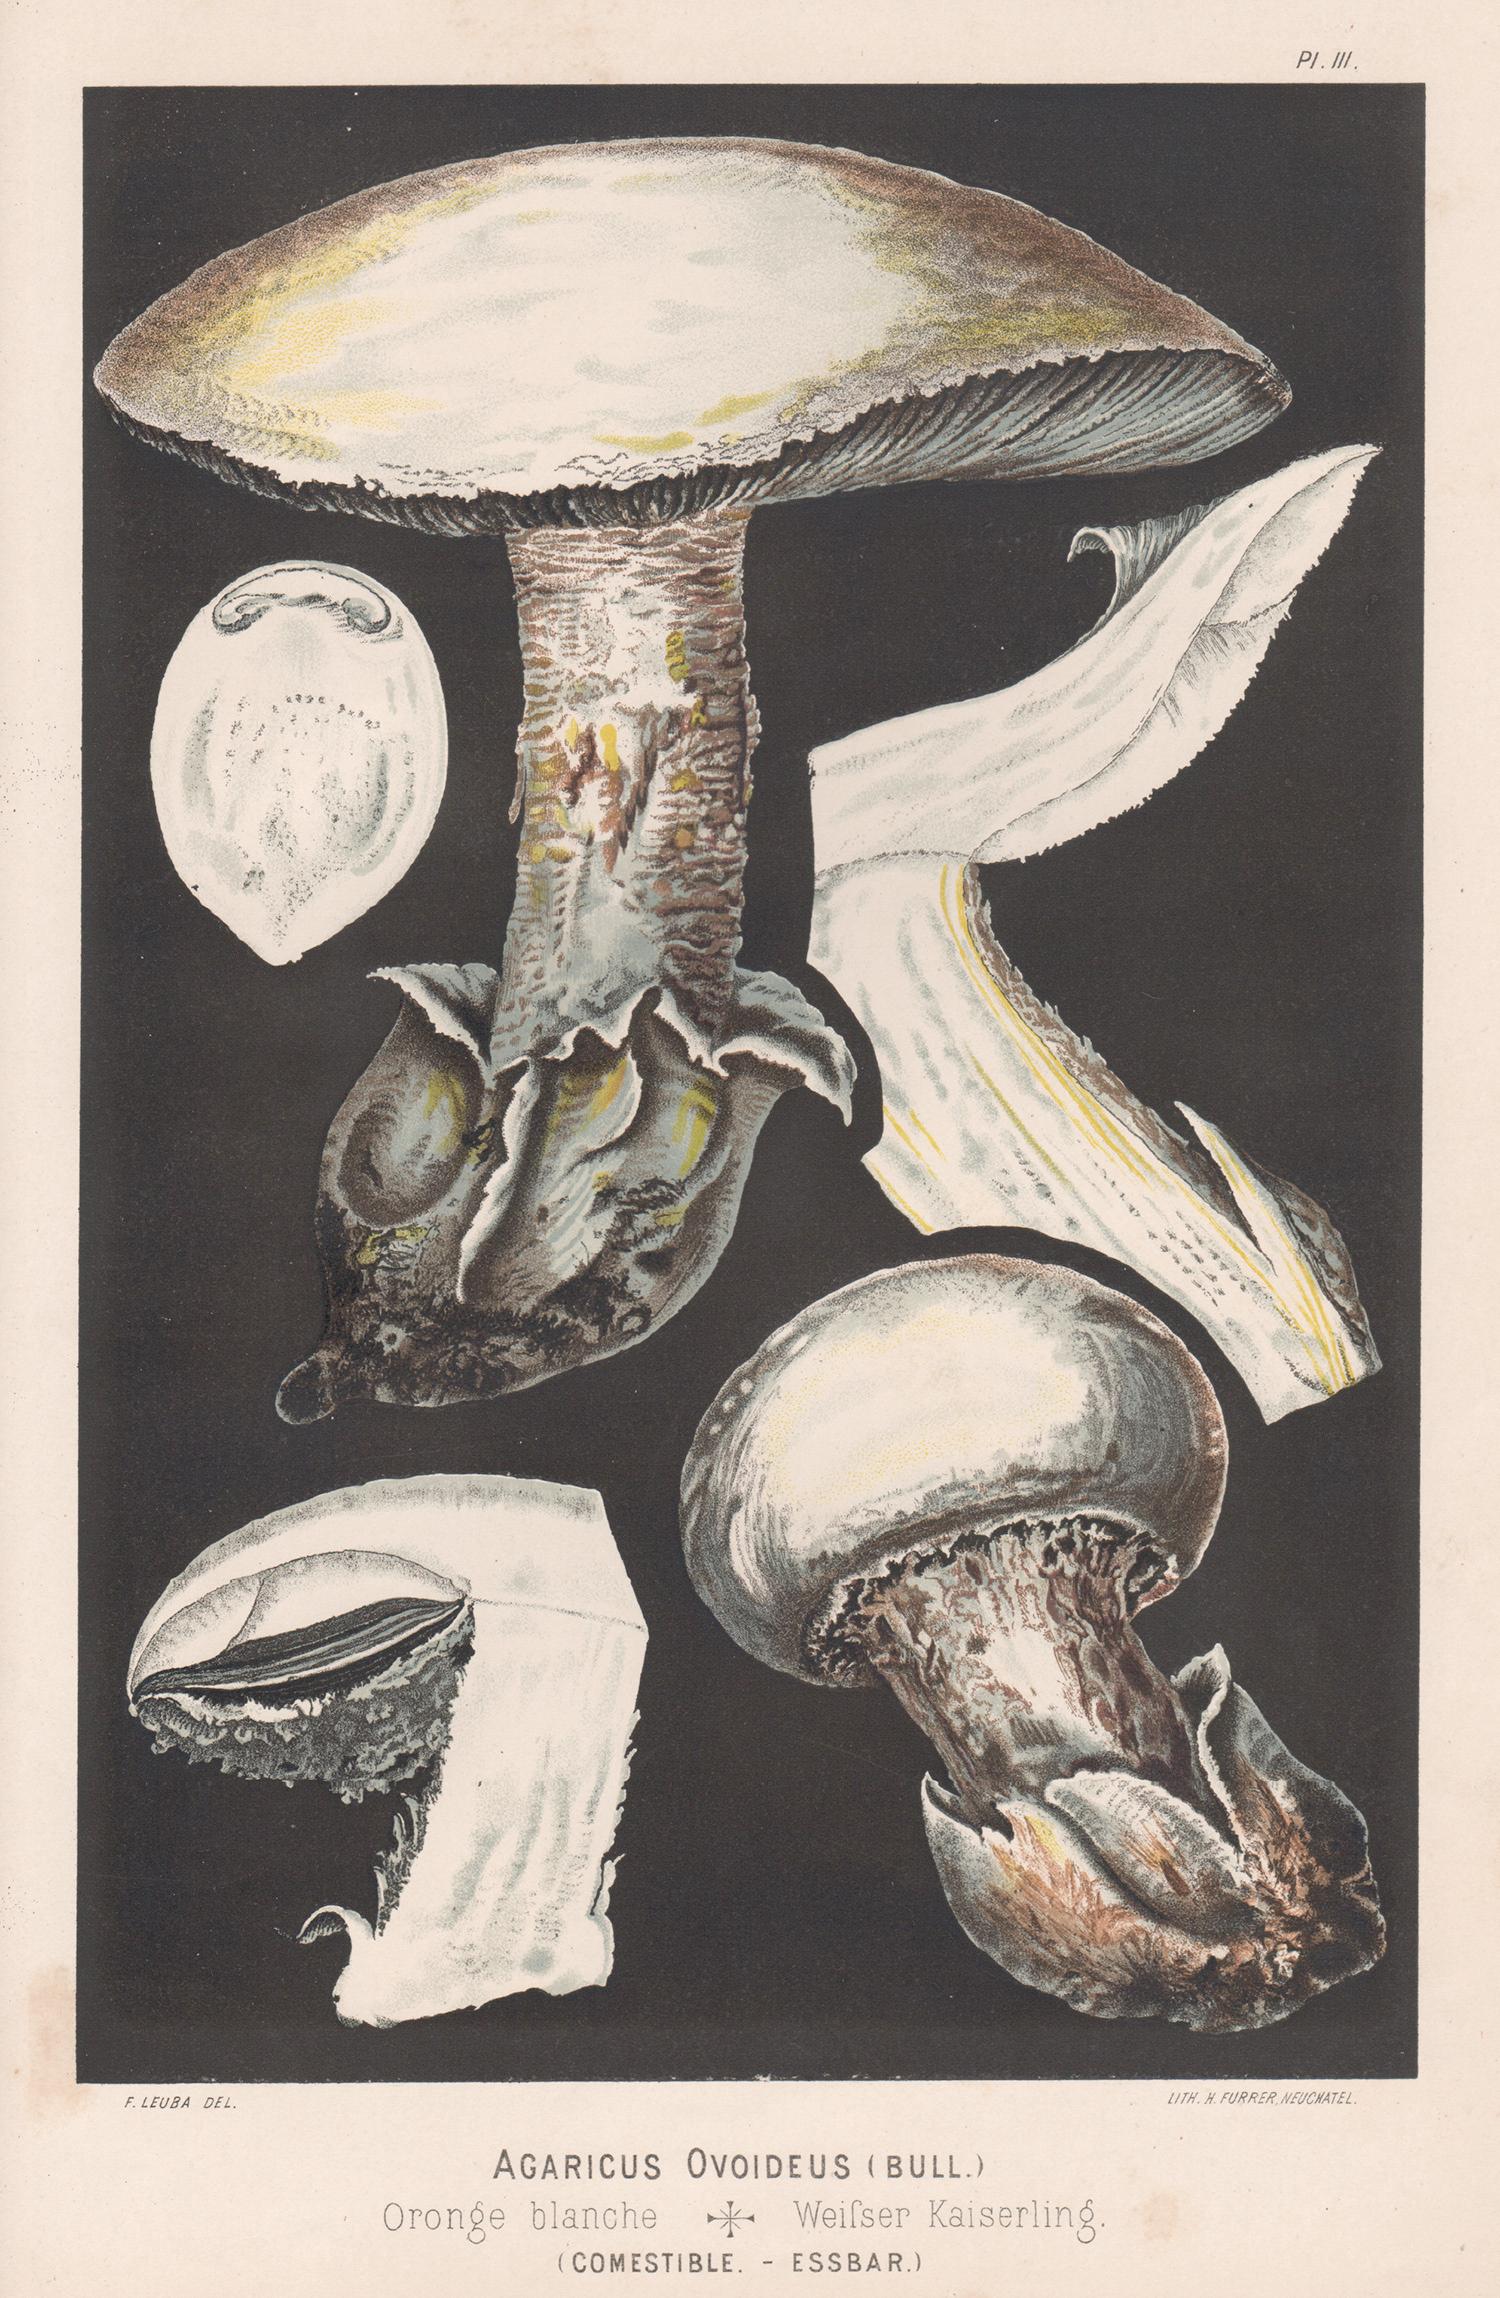 H Furrer after Fritz Leuba Print - Agaricus Ovoideus, Leuba antique mushroom fungi botanical chromolithograph print